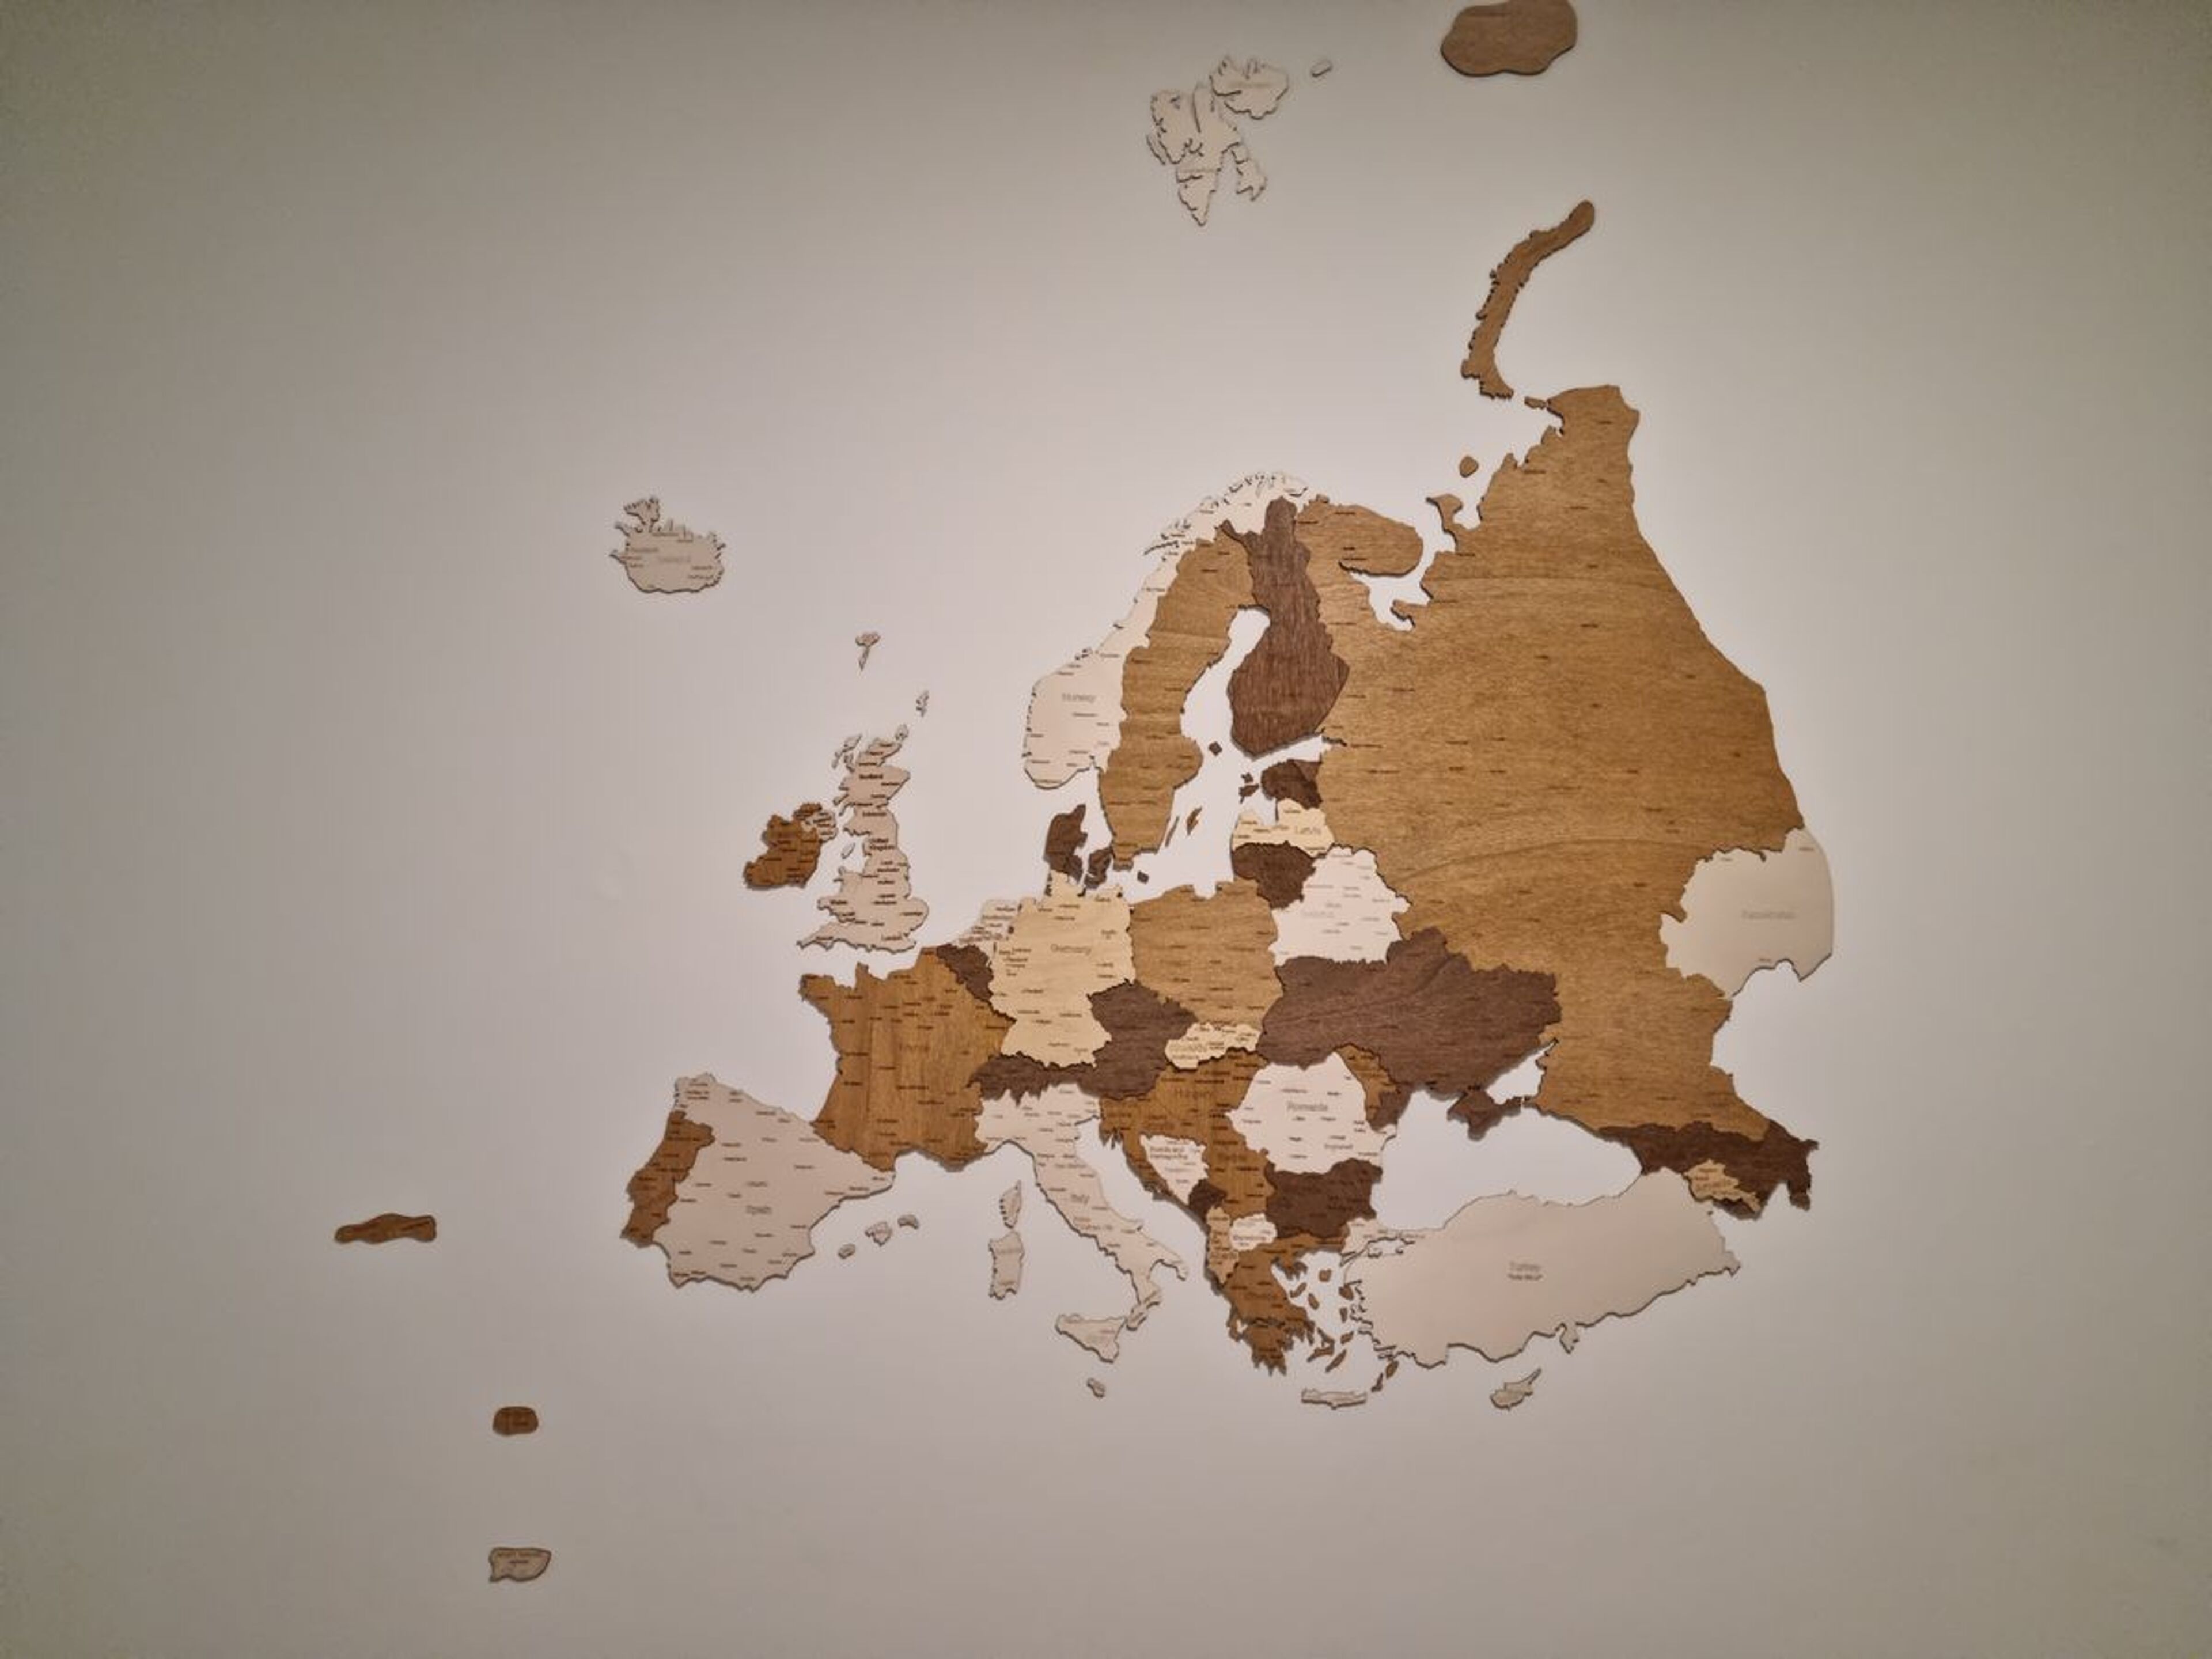 Reseña de Mapa de pared de madera de Europa - imagen de Jakub